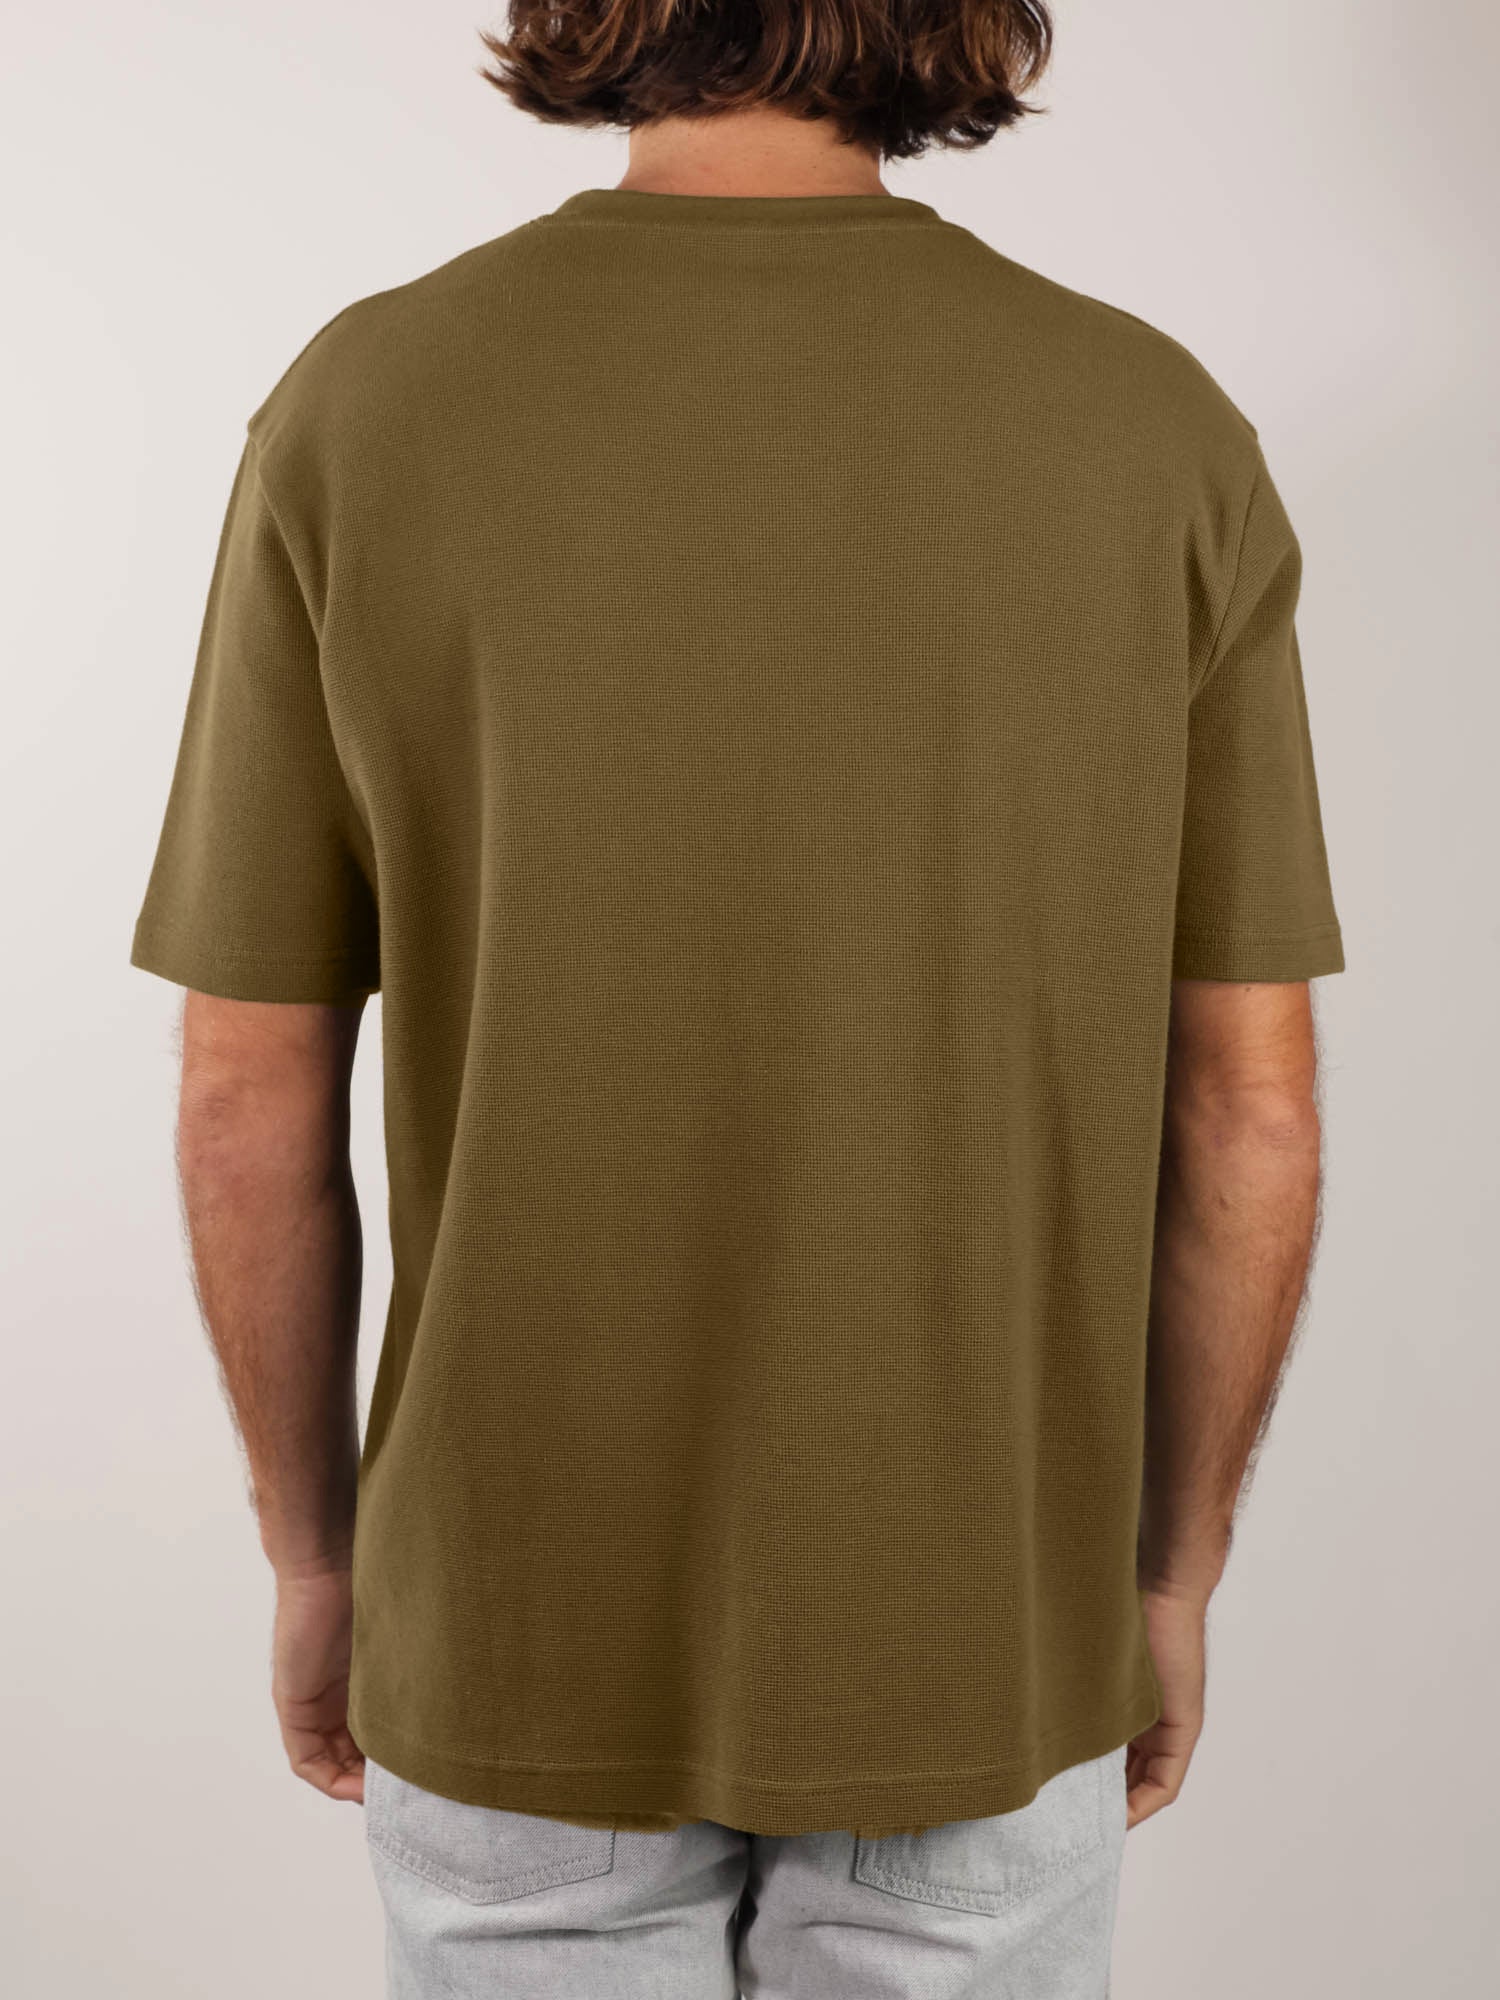 Nioro - T-shirt